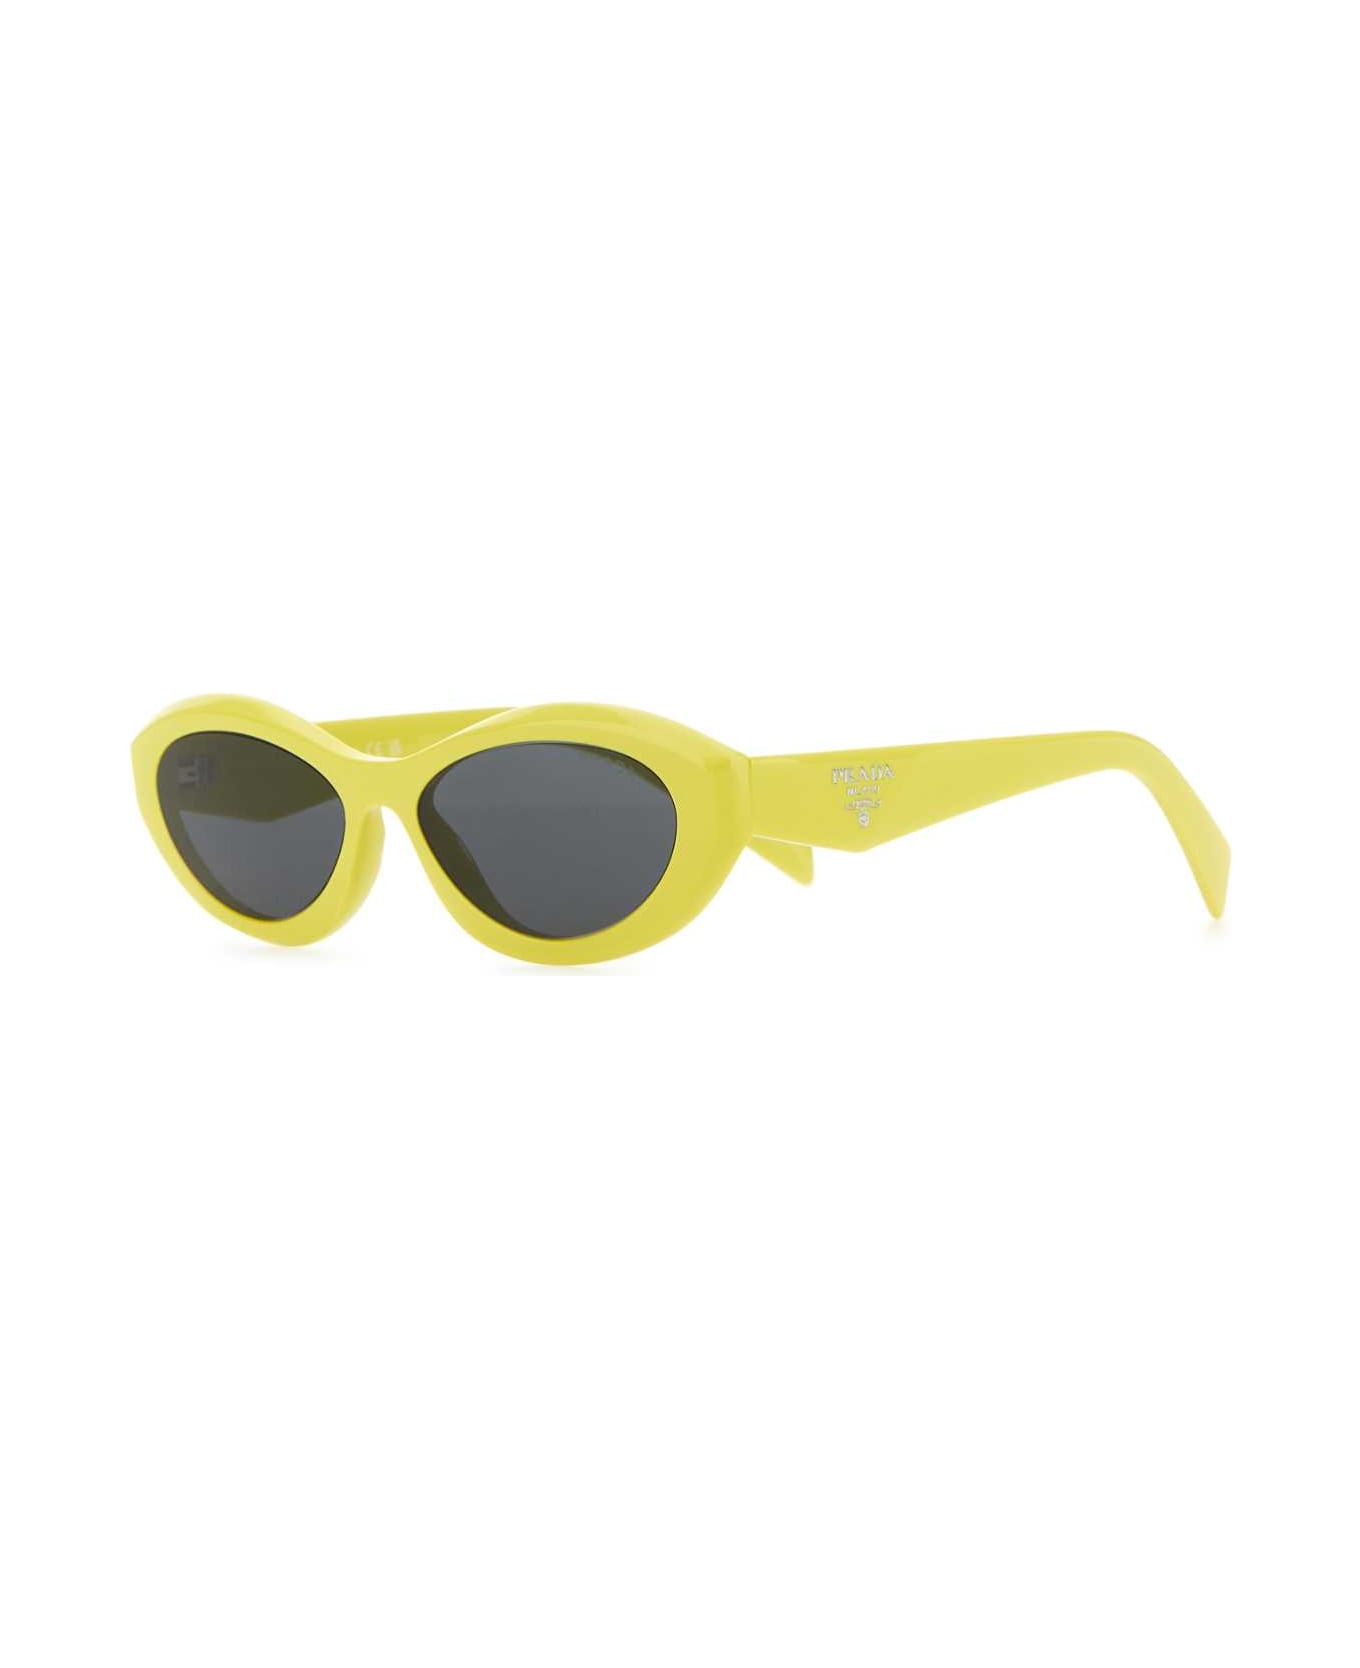 Prada Yellow Acetate Sunglasses - LENSESARDESIA